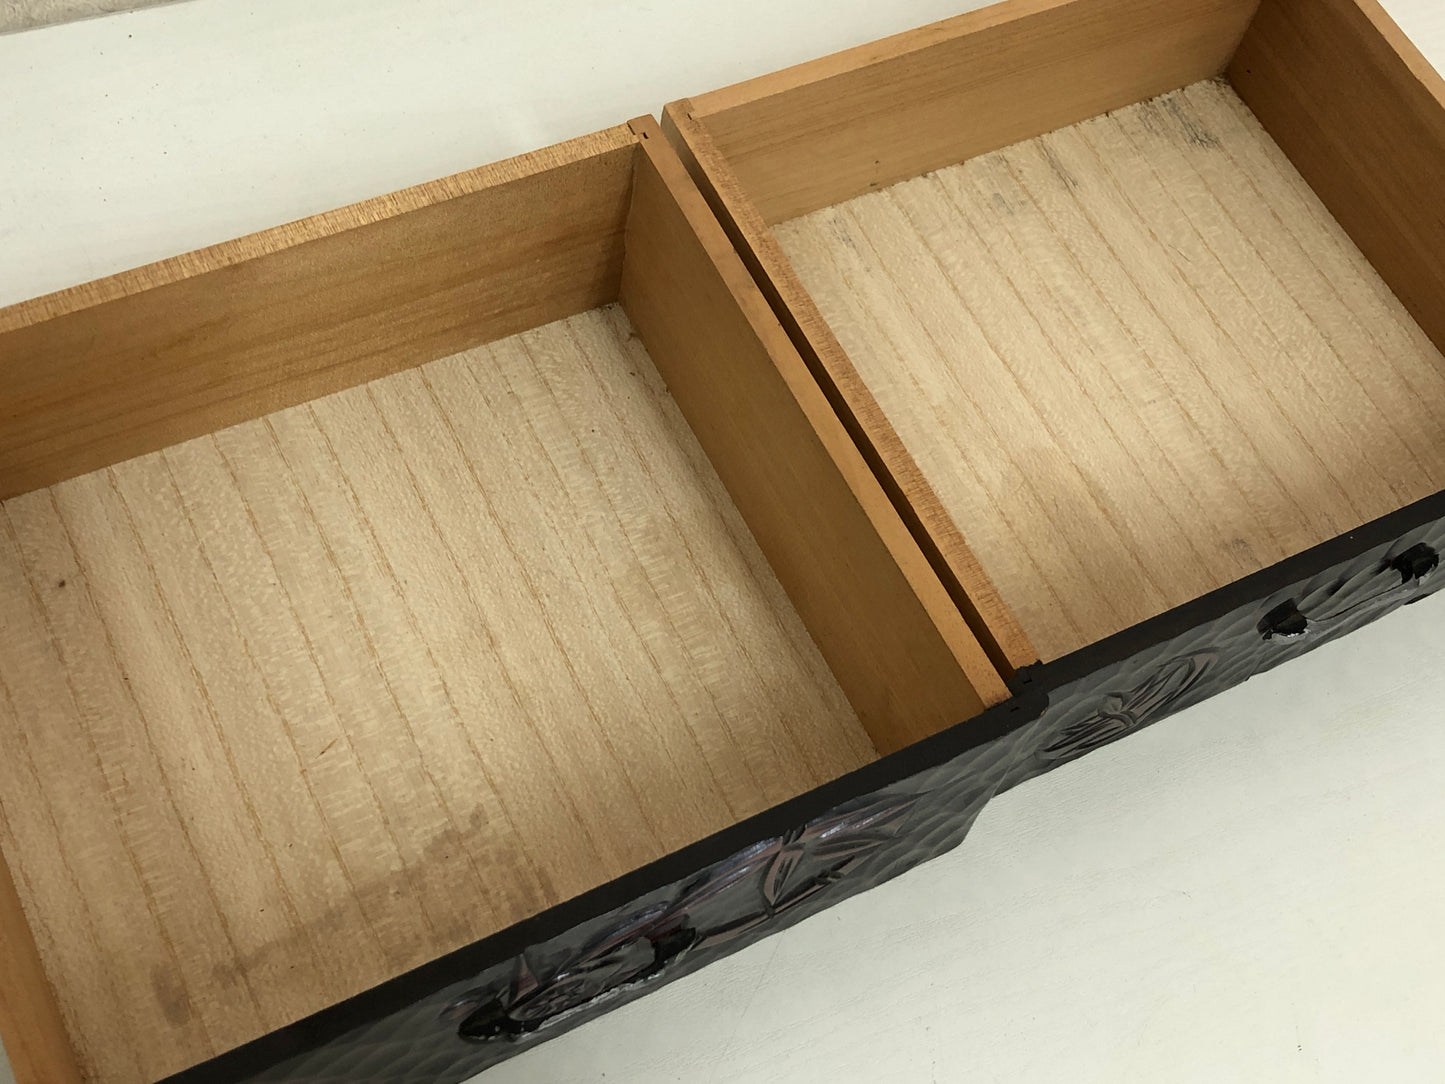 Y4160 TANSU Kamakura carving Accessory case chest Japan antique vintage storage